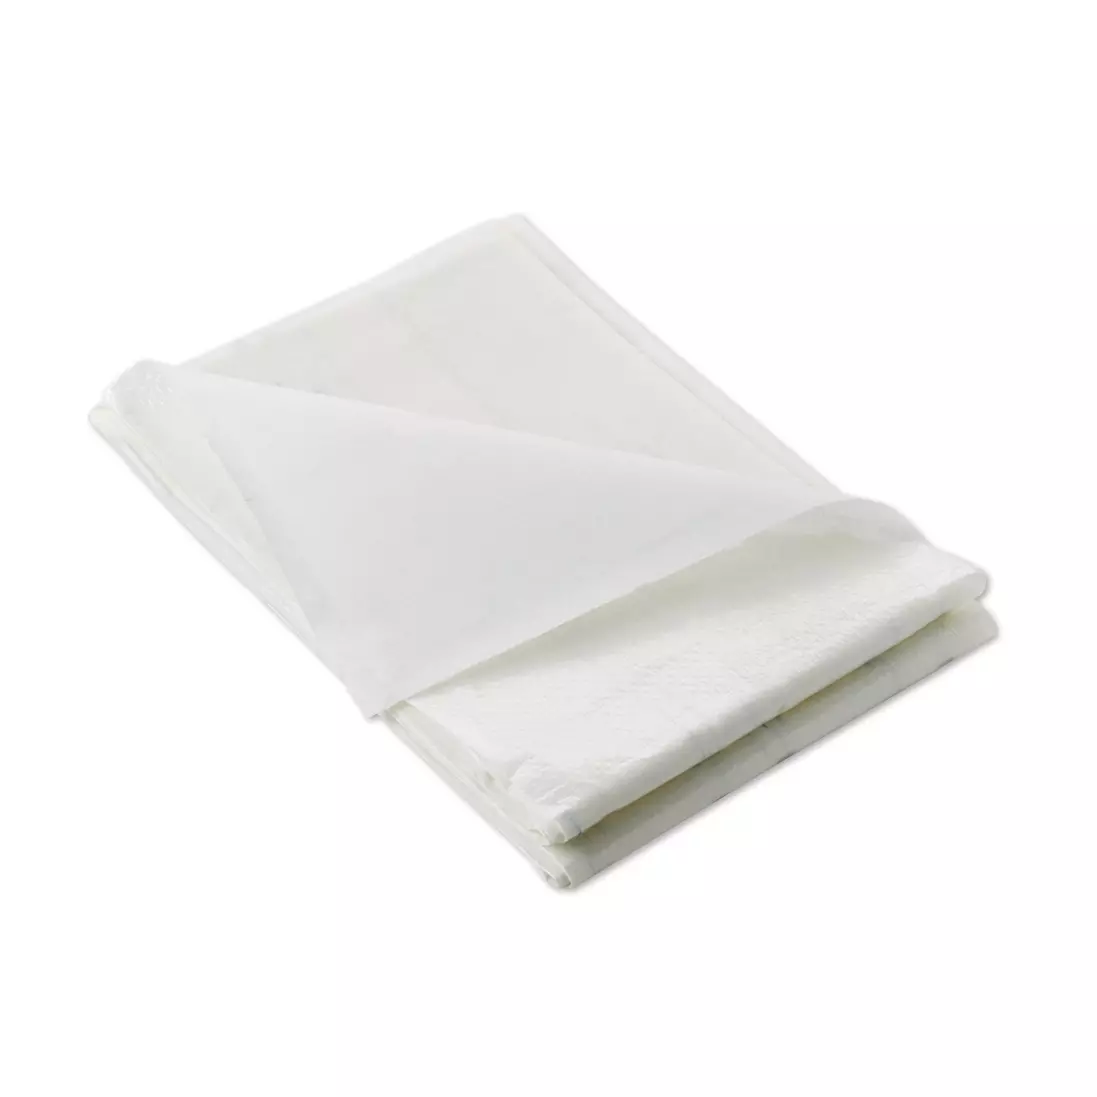 Disposable protective pads, 200 pcs